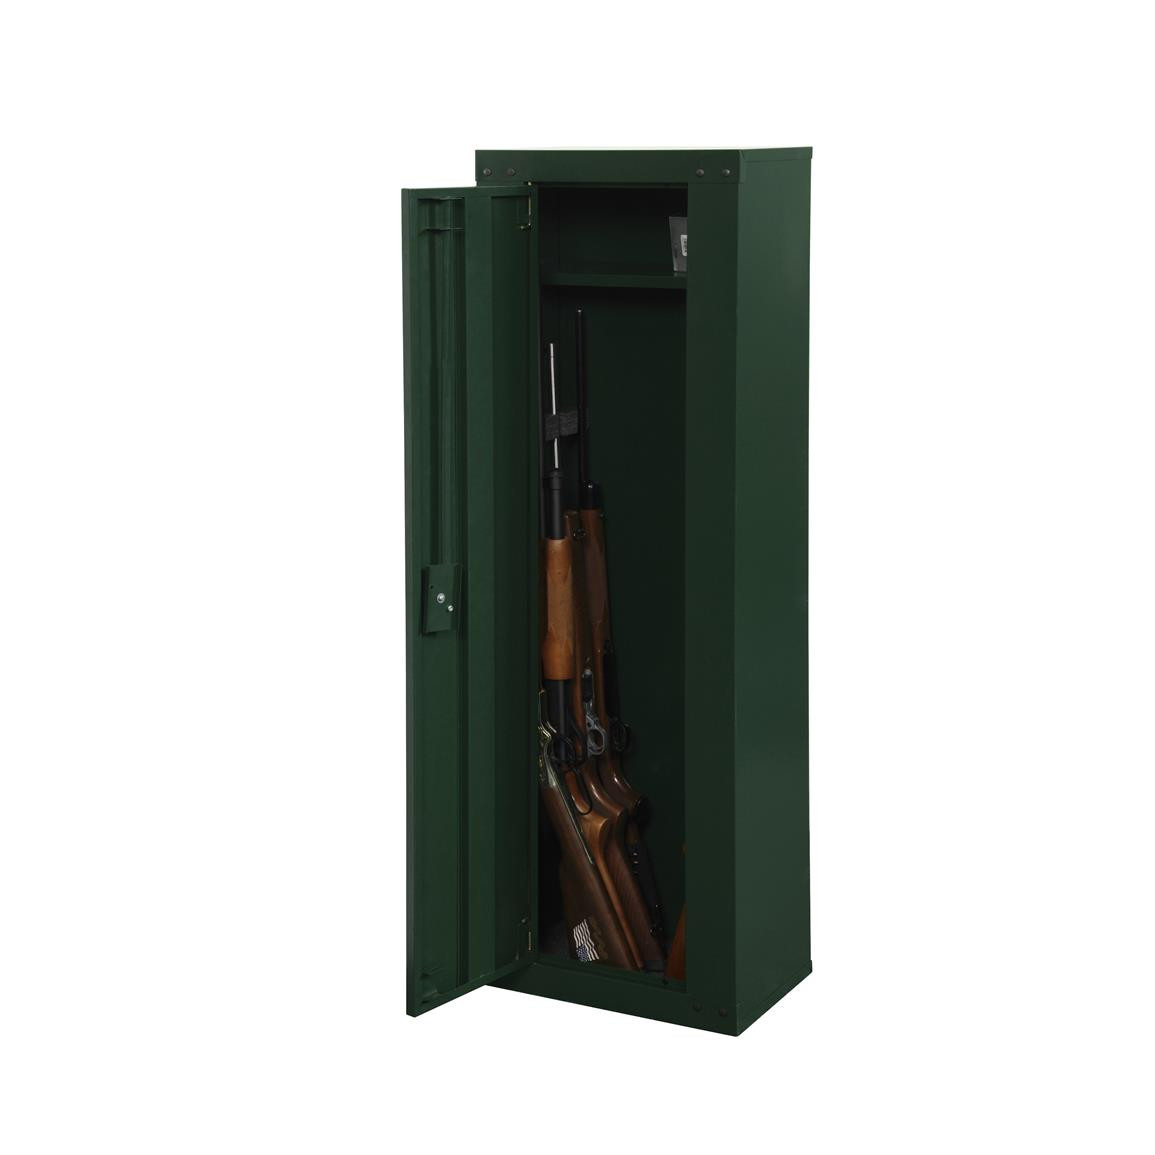 Best ideas about Metal Gun Cabinet
. Save or Pin 8 Gun Metal Cabinet American Furniture Classics Now.